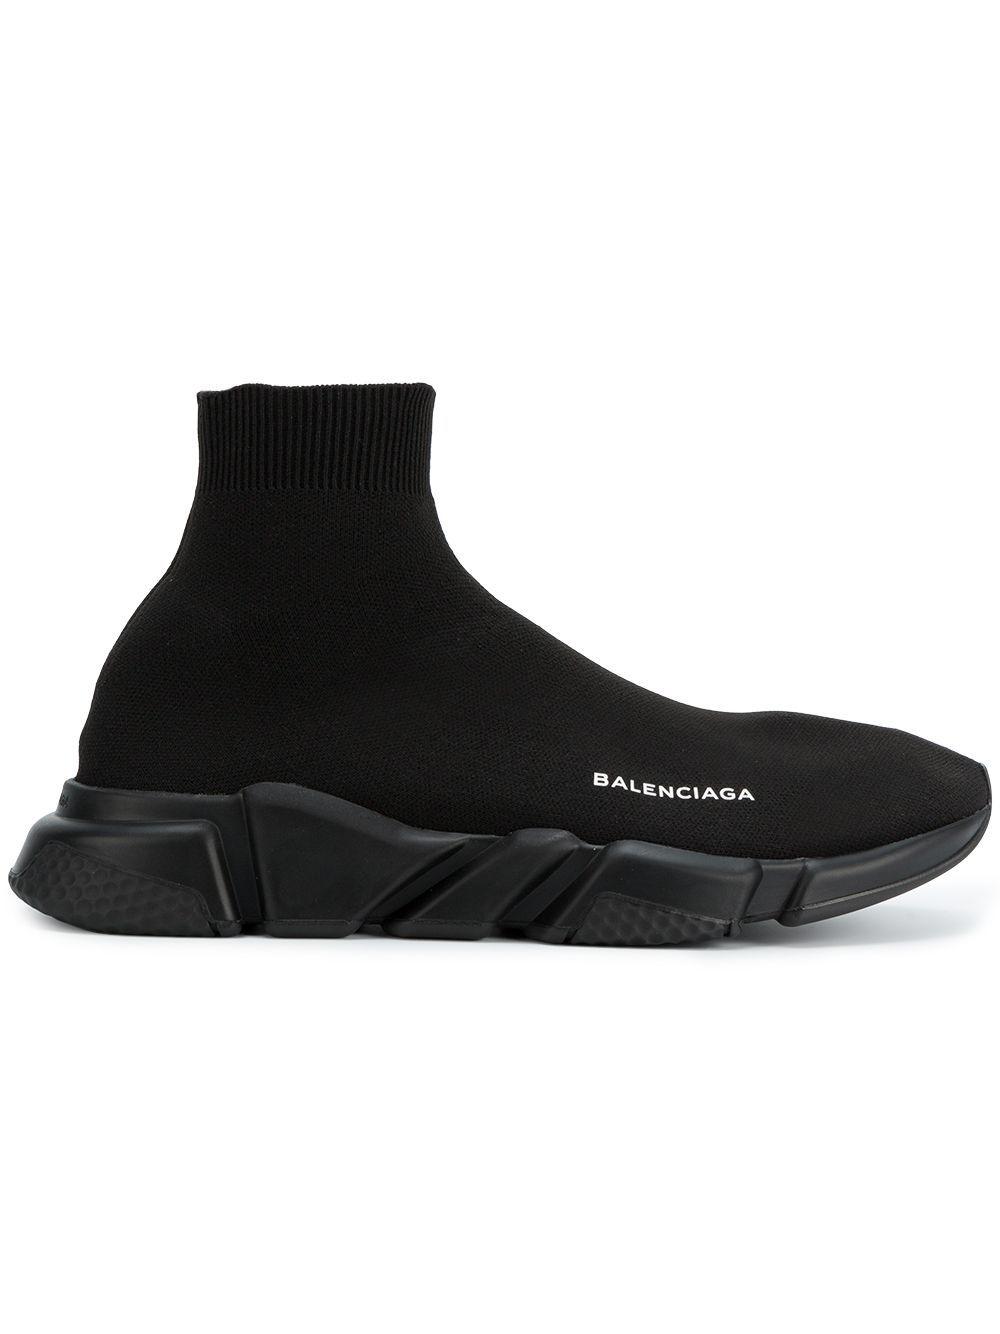 Balenciaga Neoprene Speed Sneakers in Black - Save 14% - Lyst